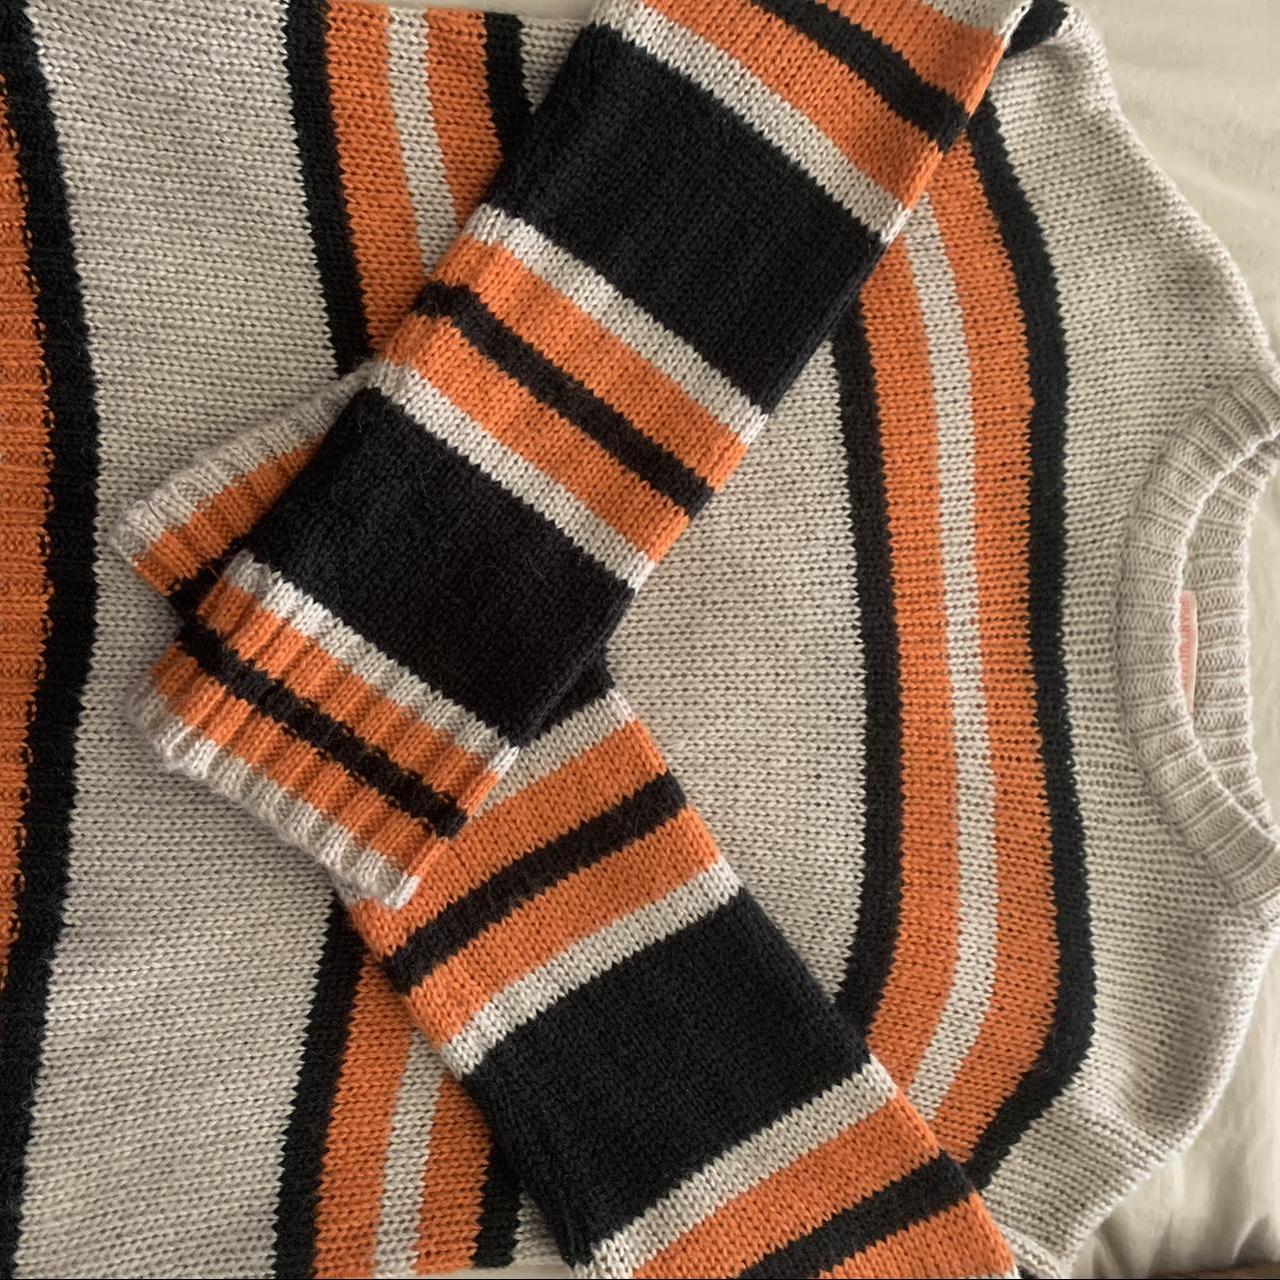 Orange And Black Stripe Sweater